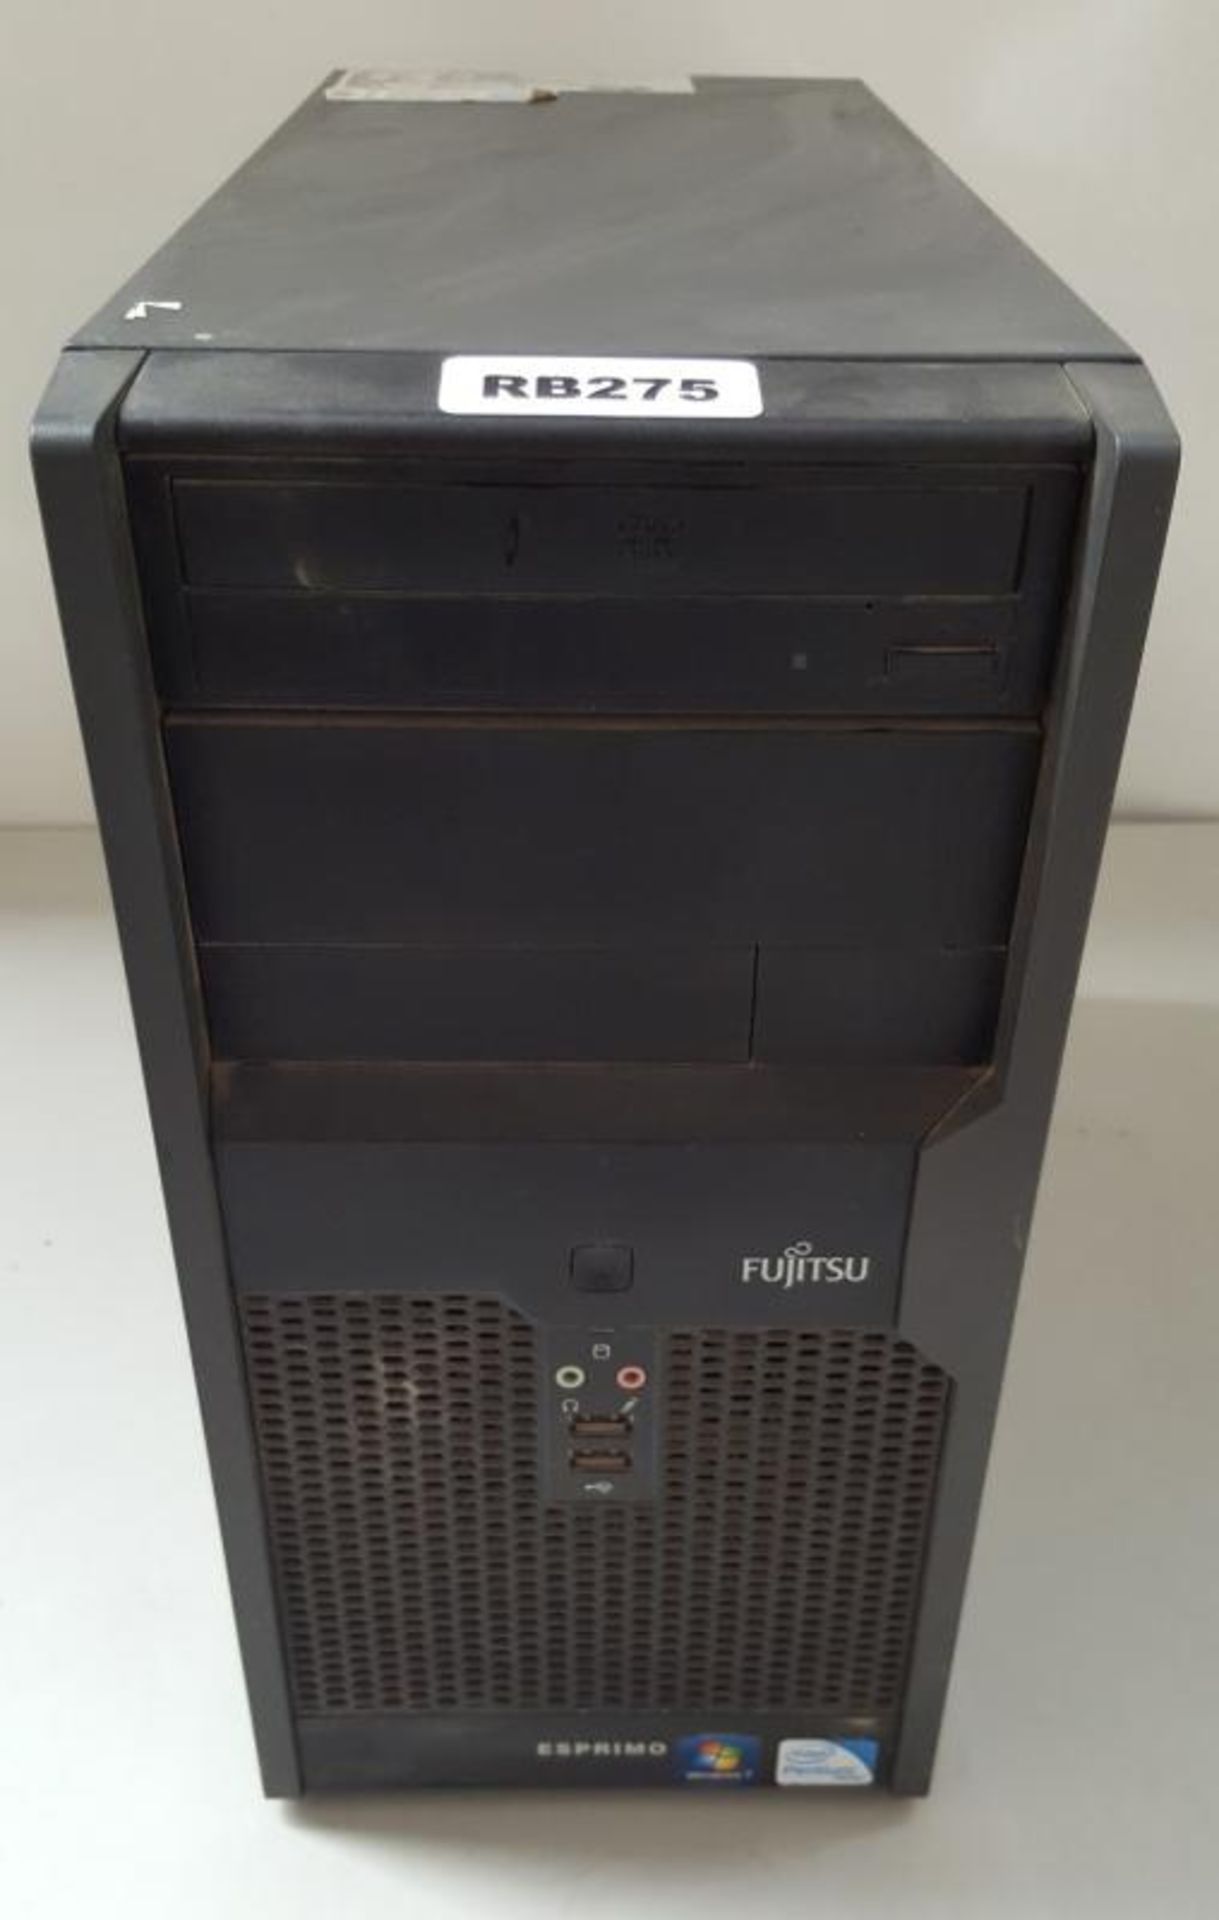 1 x Fujitsu Esprimo P2560 Desktop Computer With Intel Pentium E6600 3.06GHz &amp; 4GB RAM, Does Not